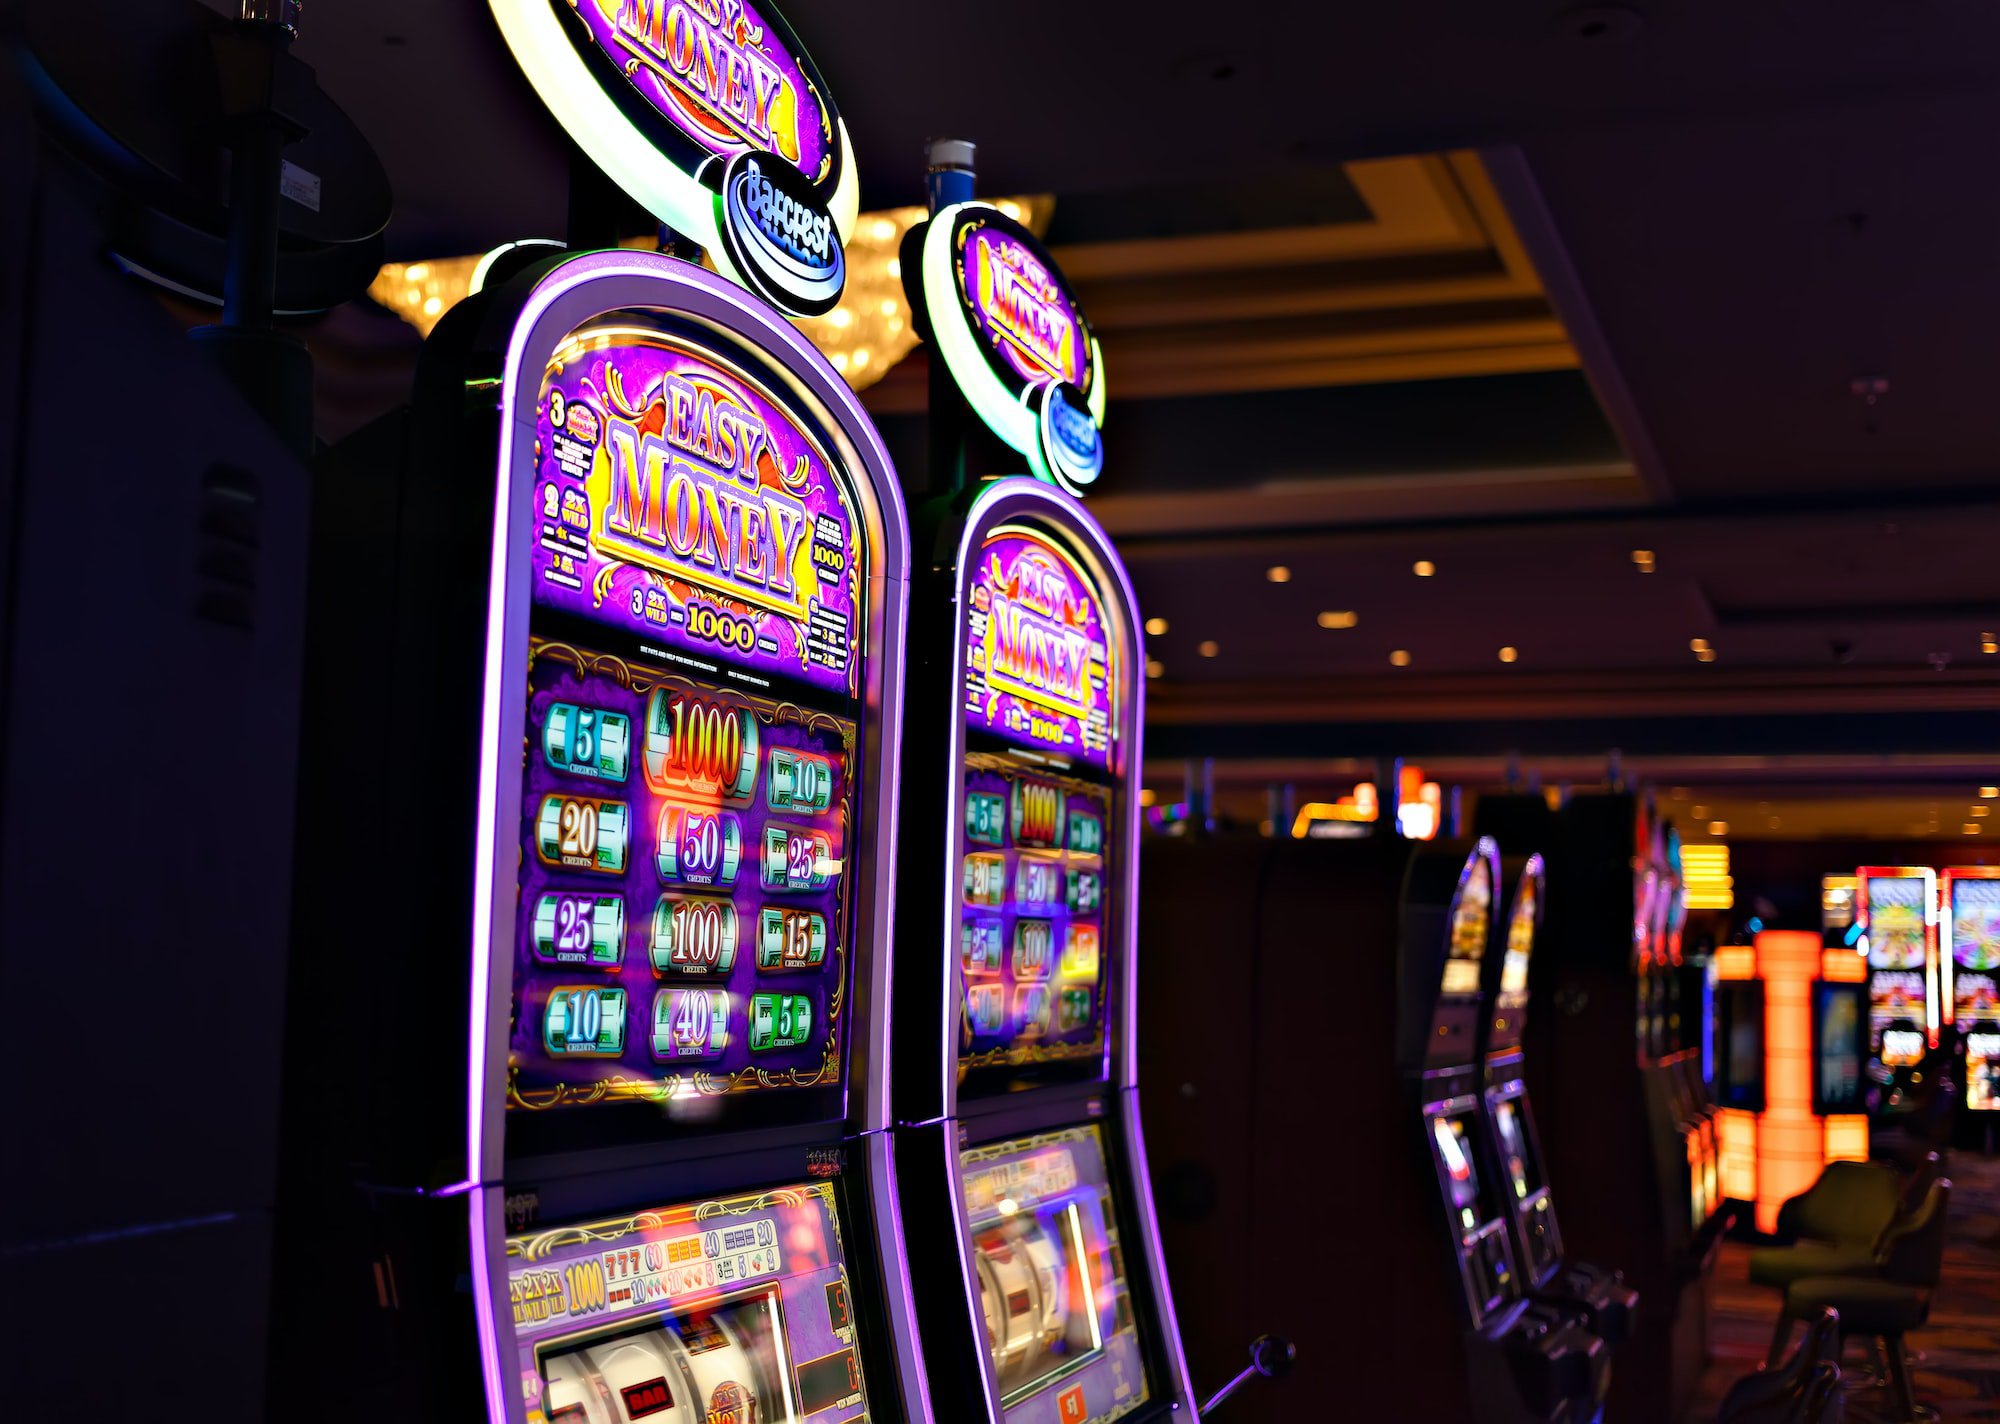 Casino (Cassatie) Royale: over informaticabedrog via ‘gokterminals’ cover